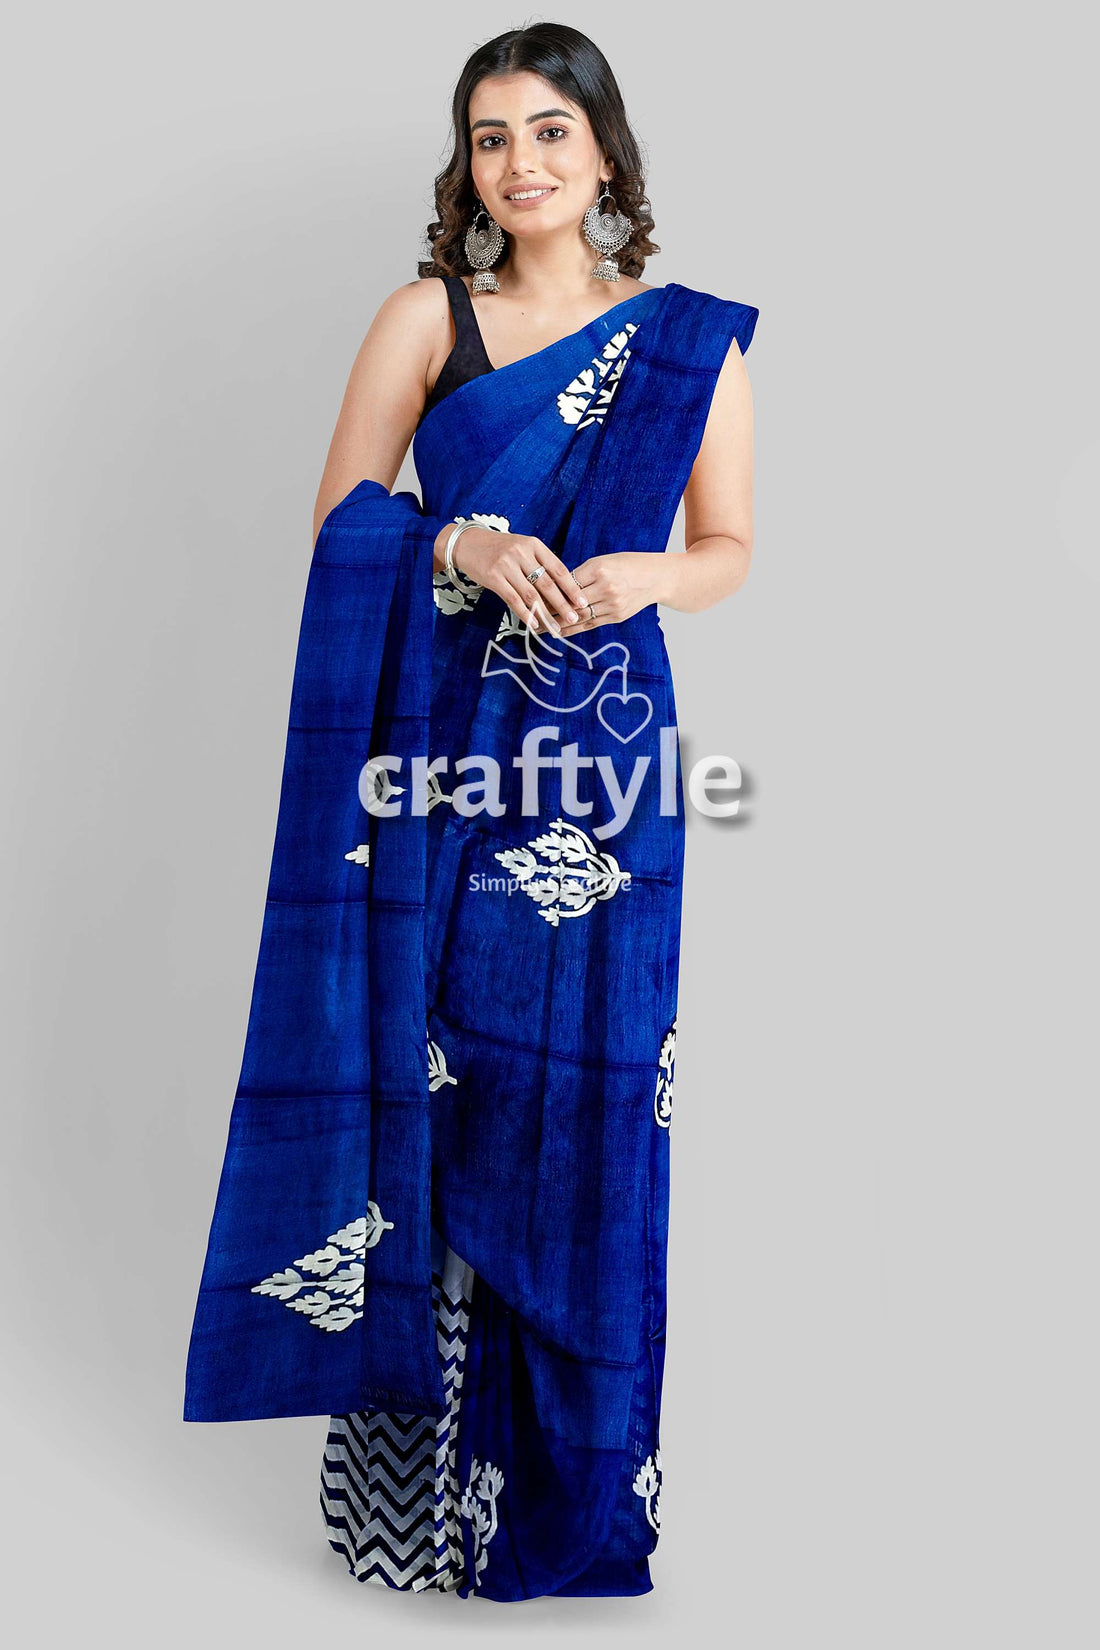 Hand Block Printed Pure Mulberry Silk Saree in Denim Blue White - Indian Ethnic Wear - Craftyle